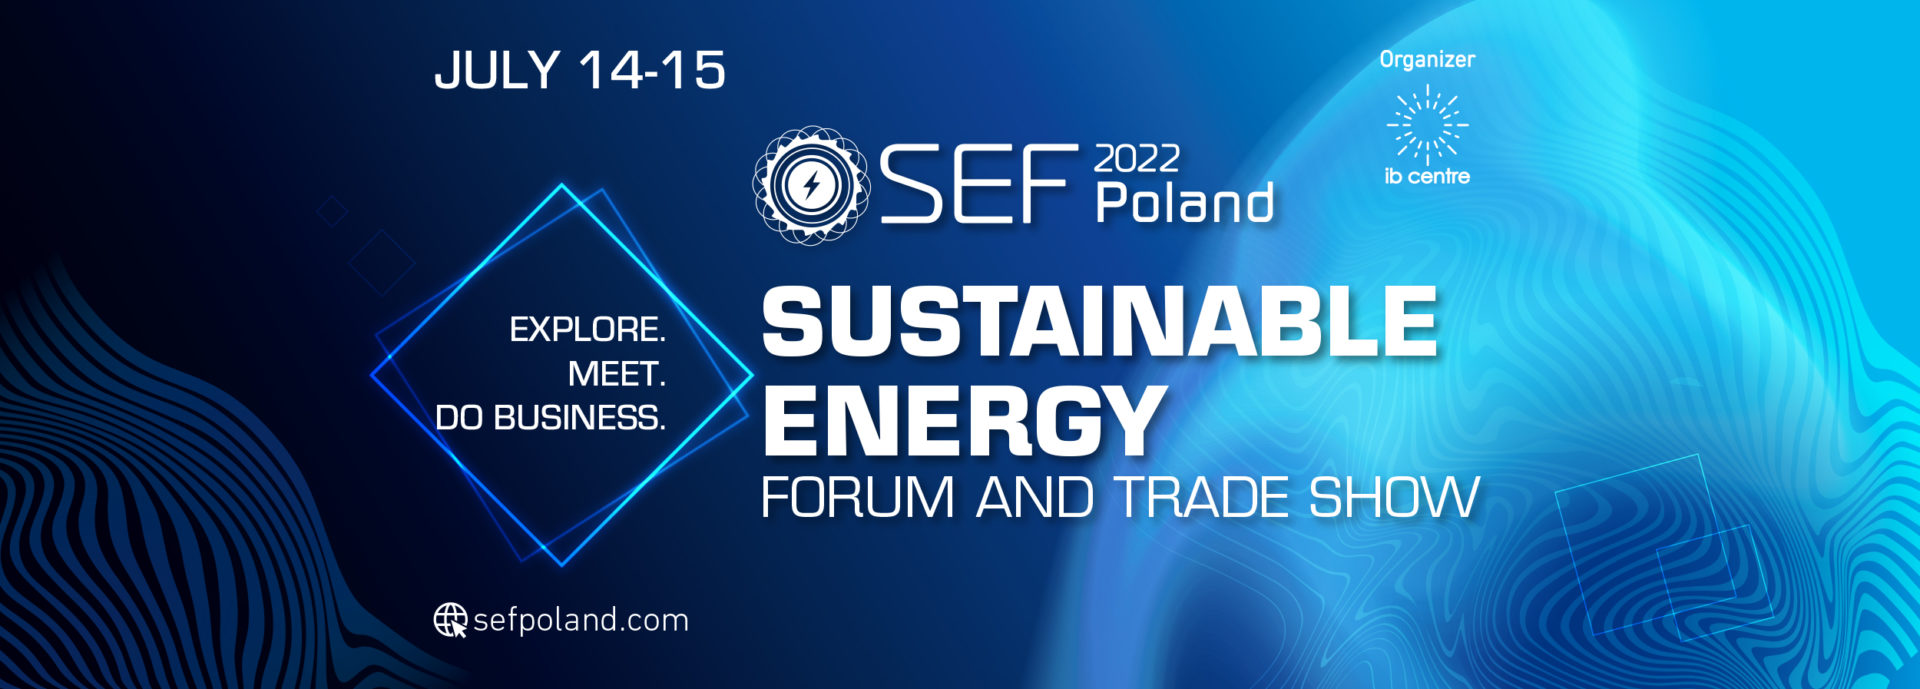 SEF Poland 2022 Zrównoważona Energia Forum i Targi